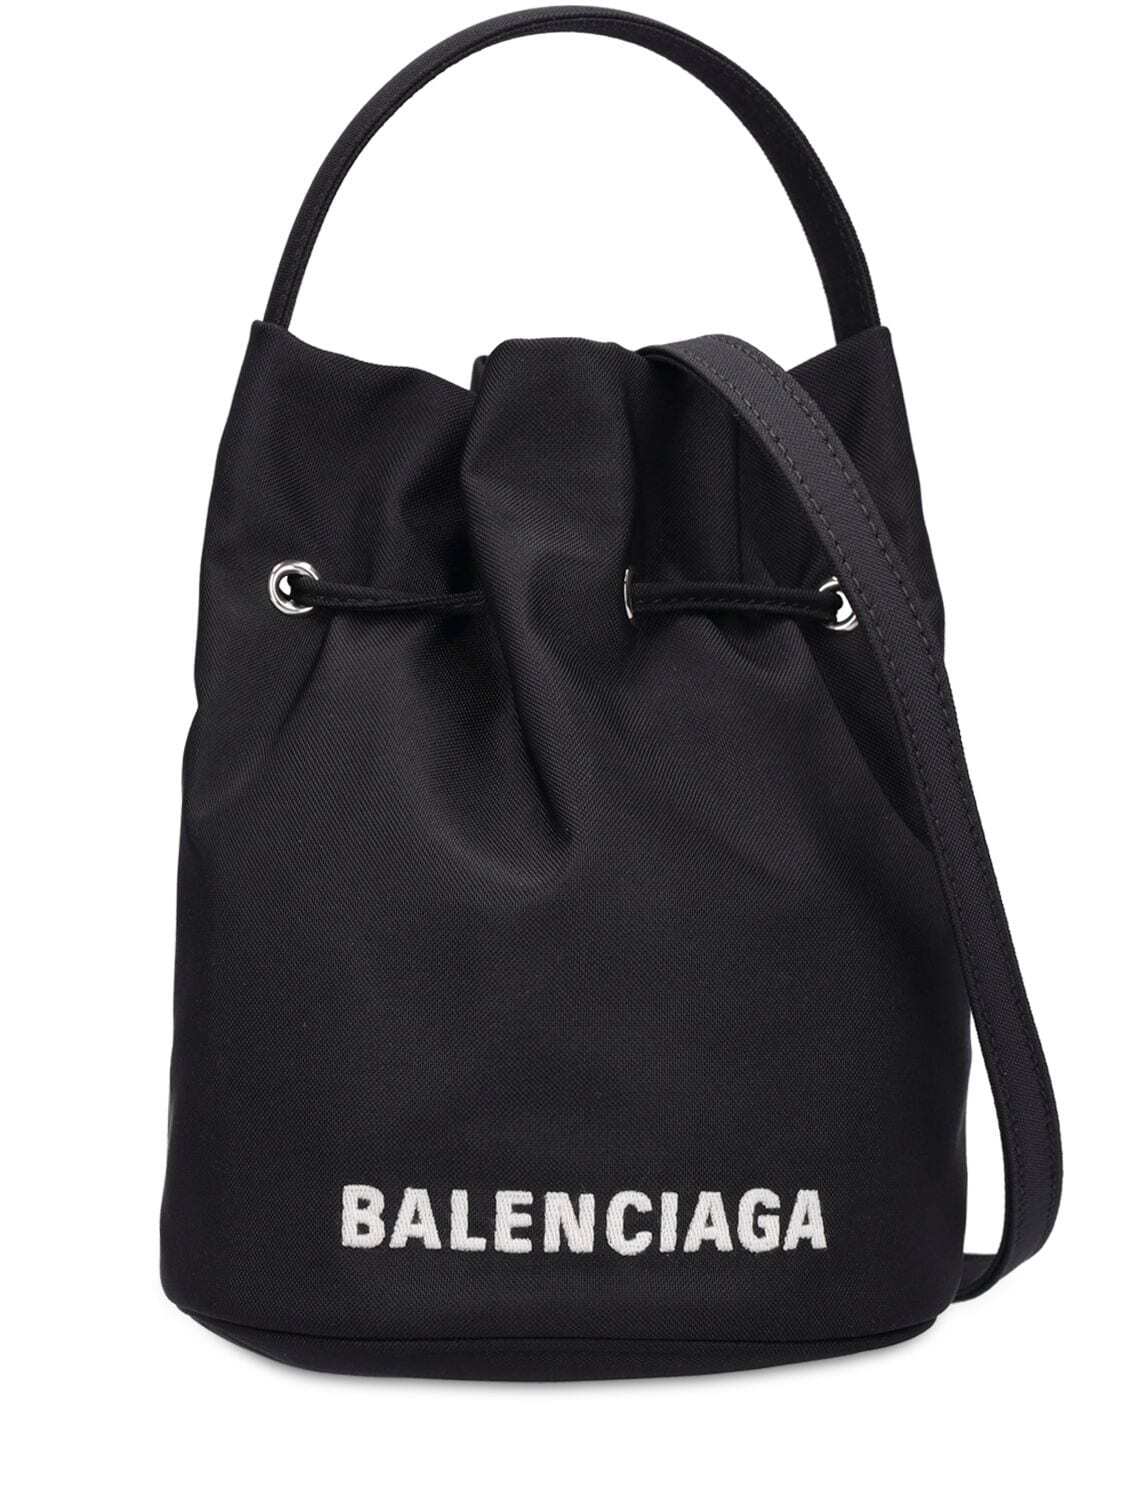 BALENCIAGA Wheel Nylon Bucket Bag in black